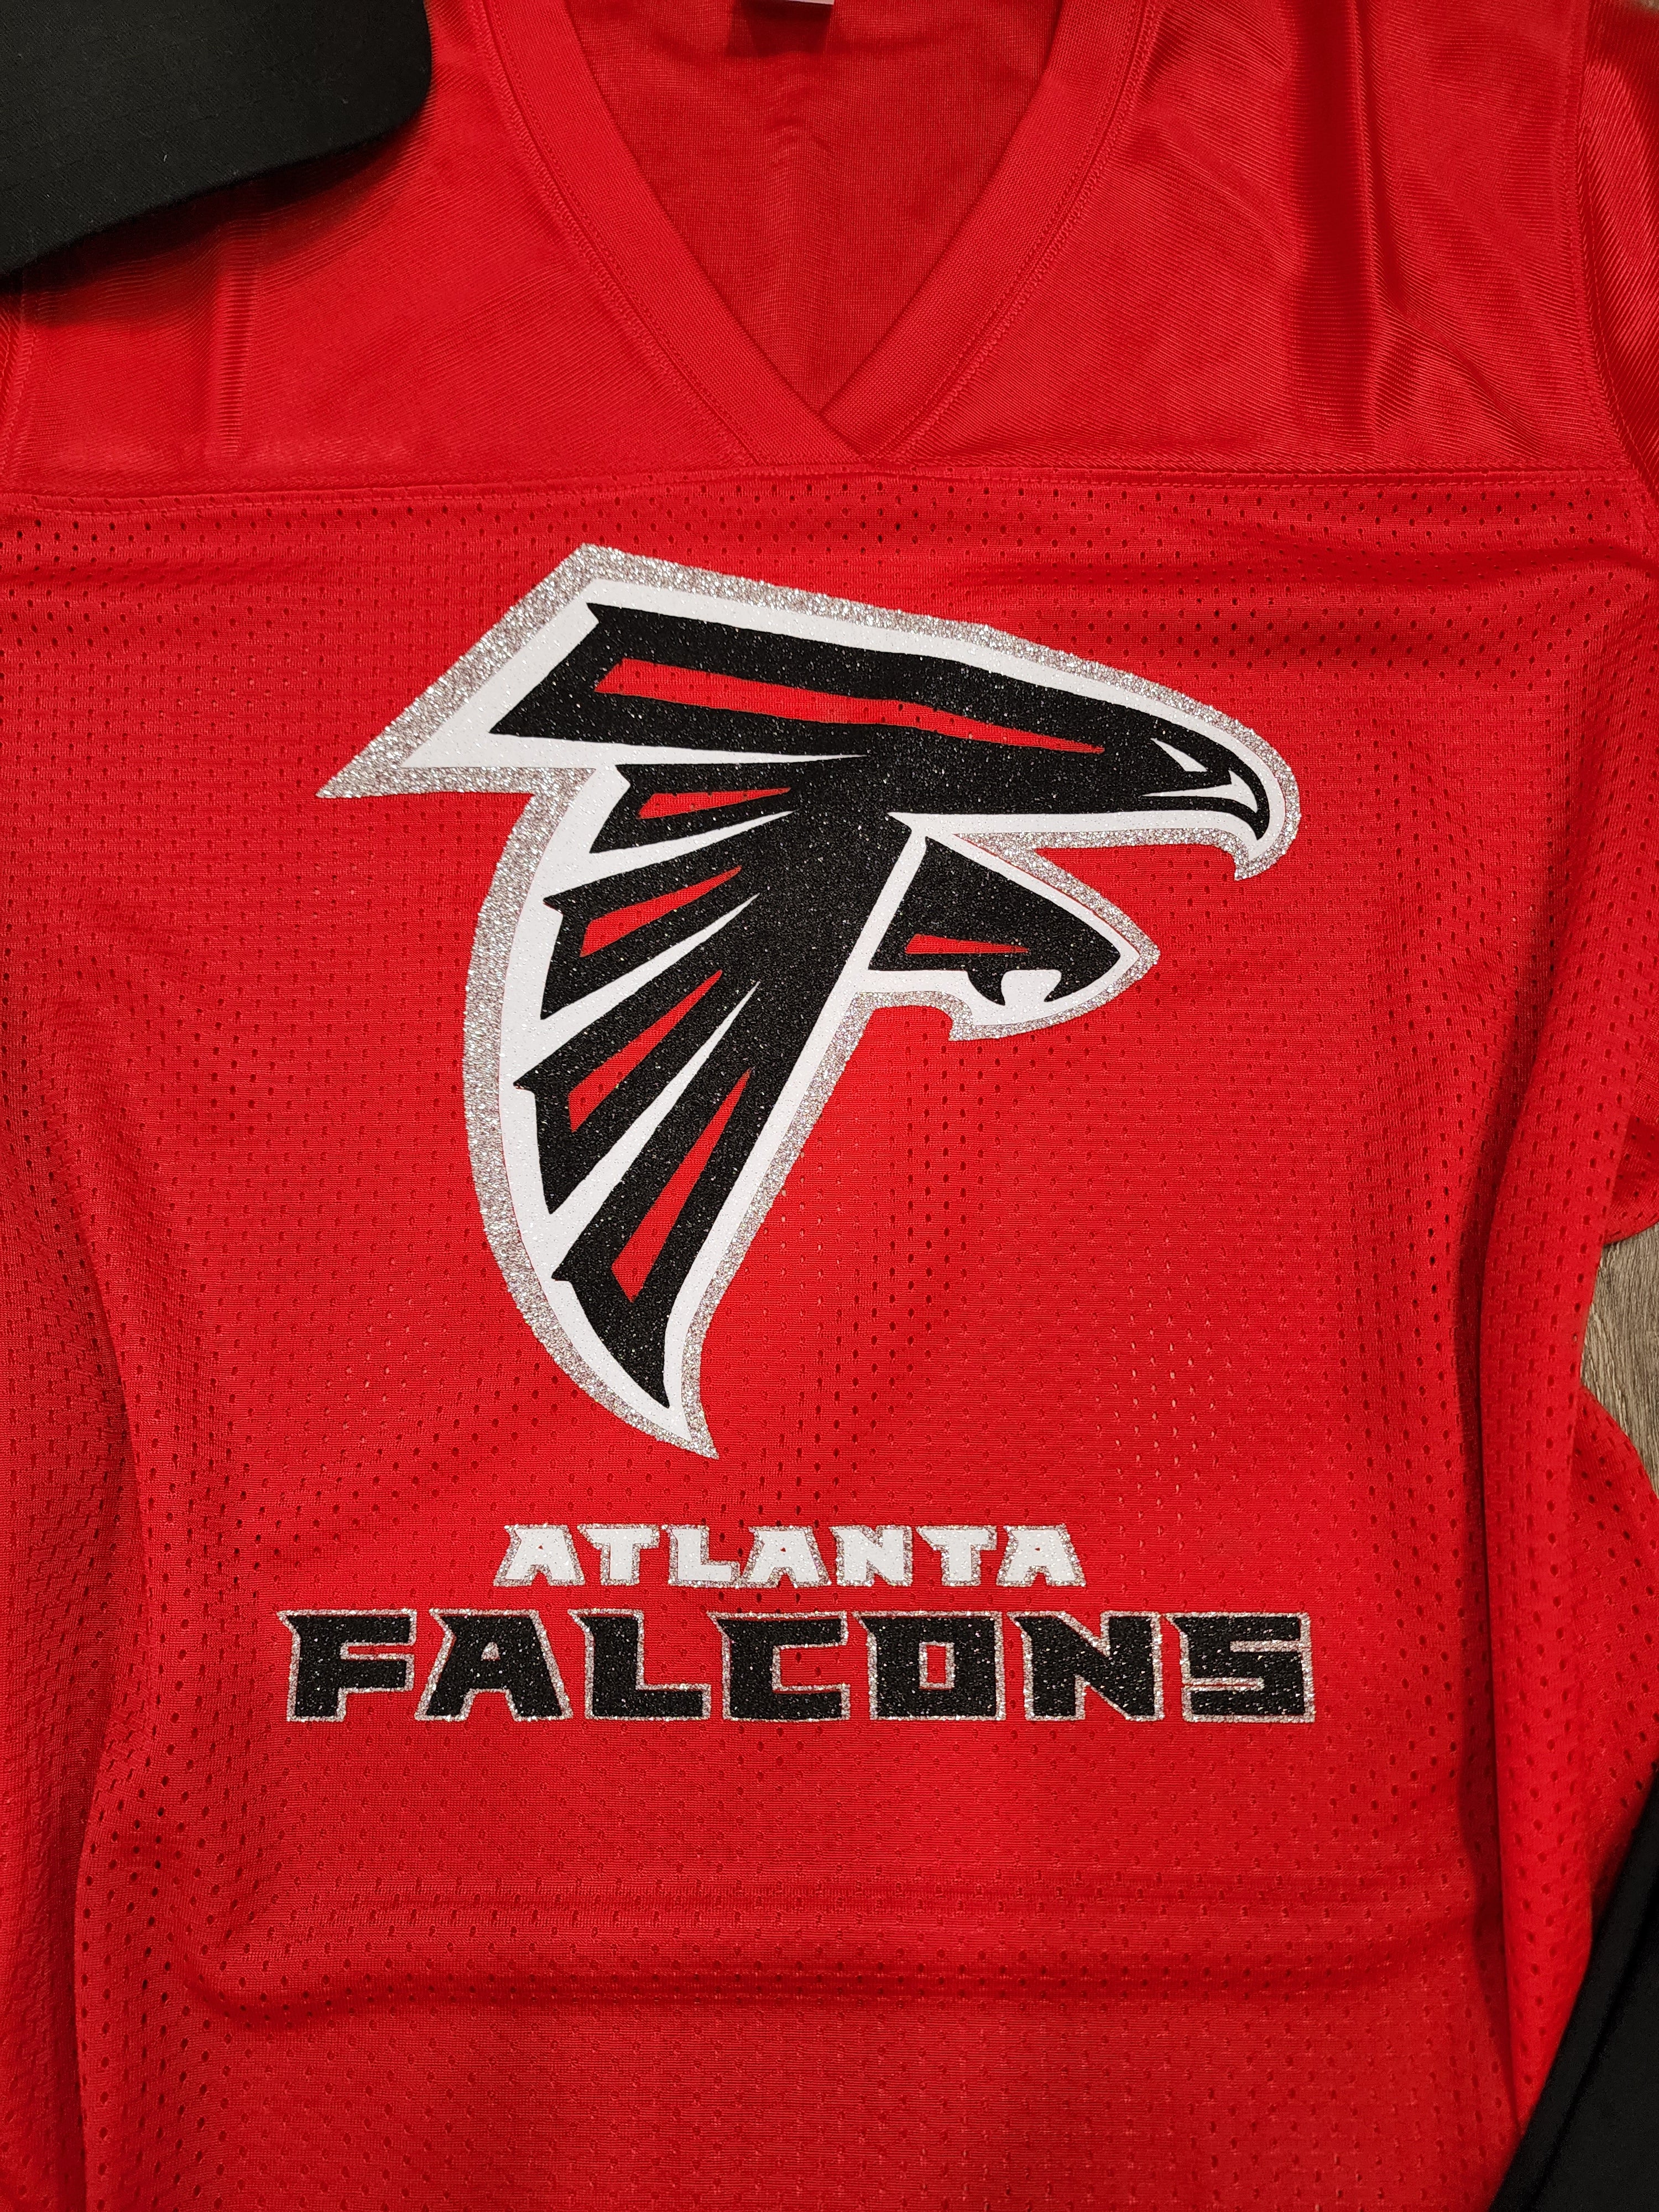 Atlanta Falcons Jerseys in Atlanta Falcons Team Shop 